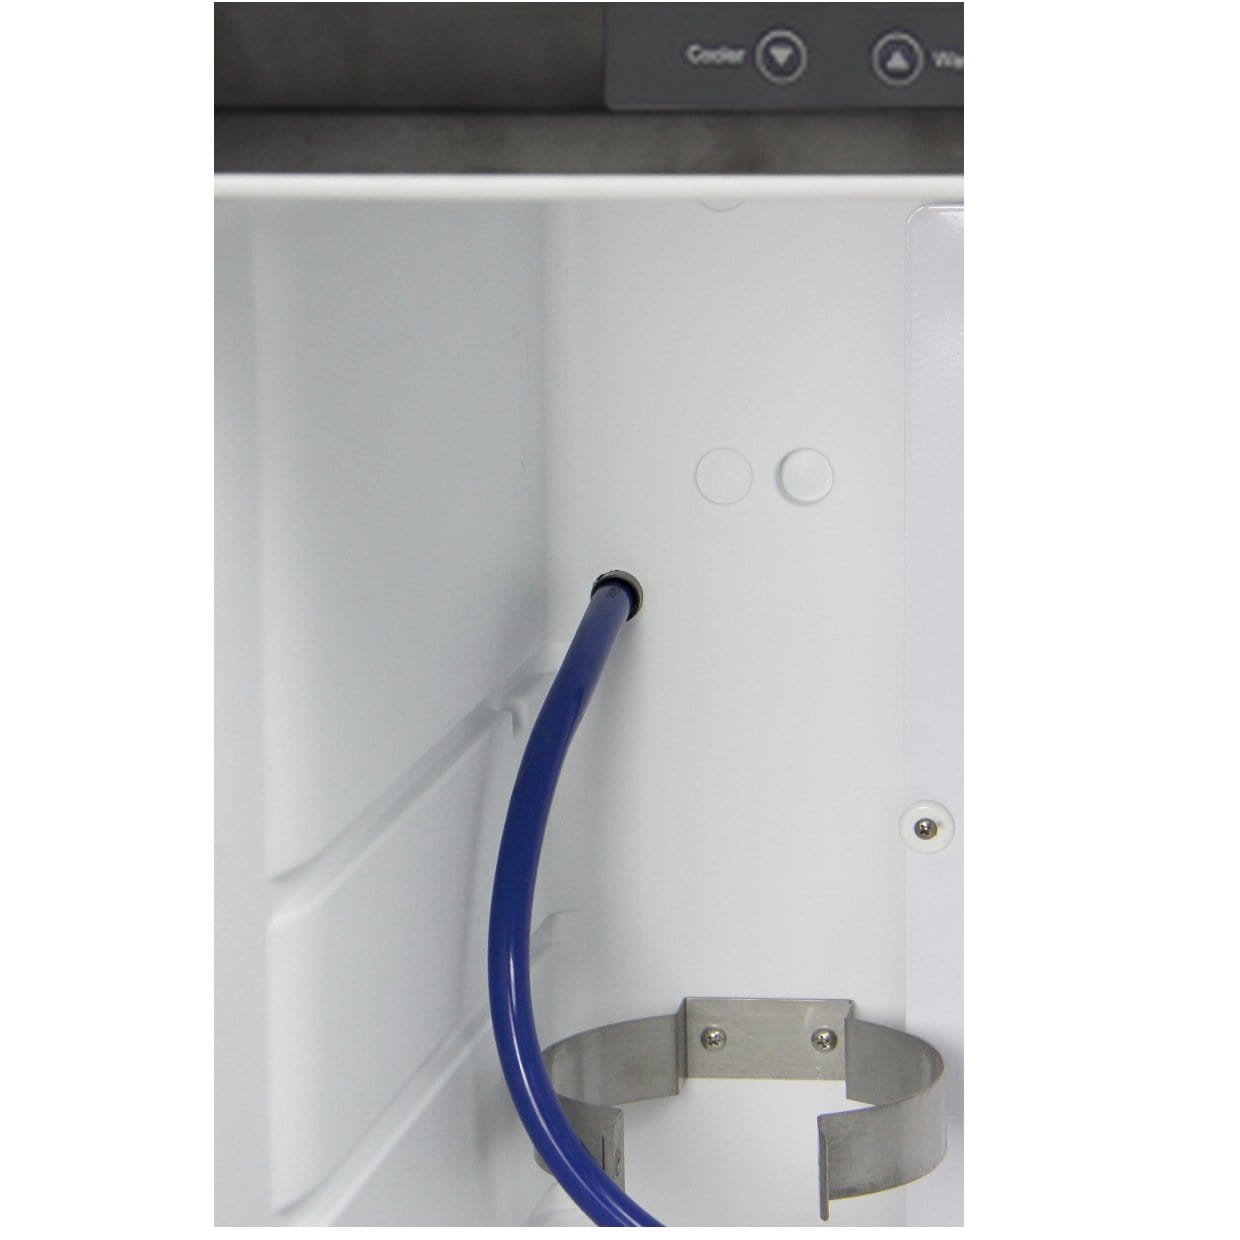 Kegco Dual Tap Faucet Digital Keg Fridge - Black Cabinet with Stainless Steel Door